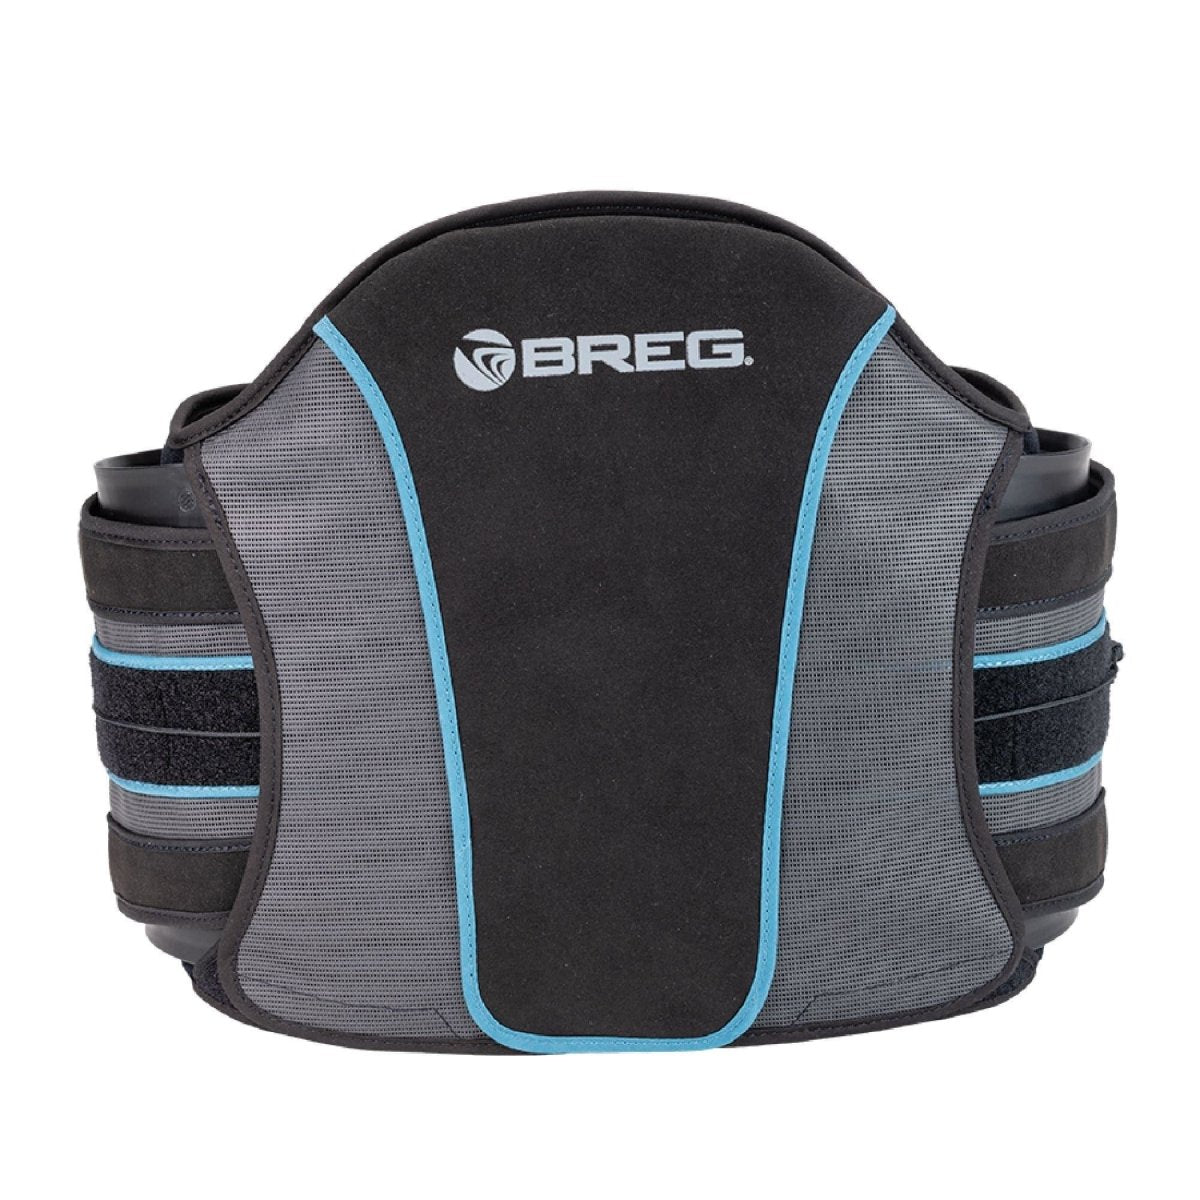 Breg Pinnacle LO 627/642 Back Brace - SP20627-000 - Brace Direct